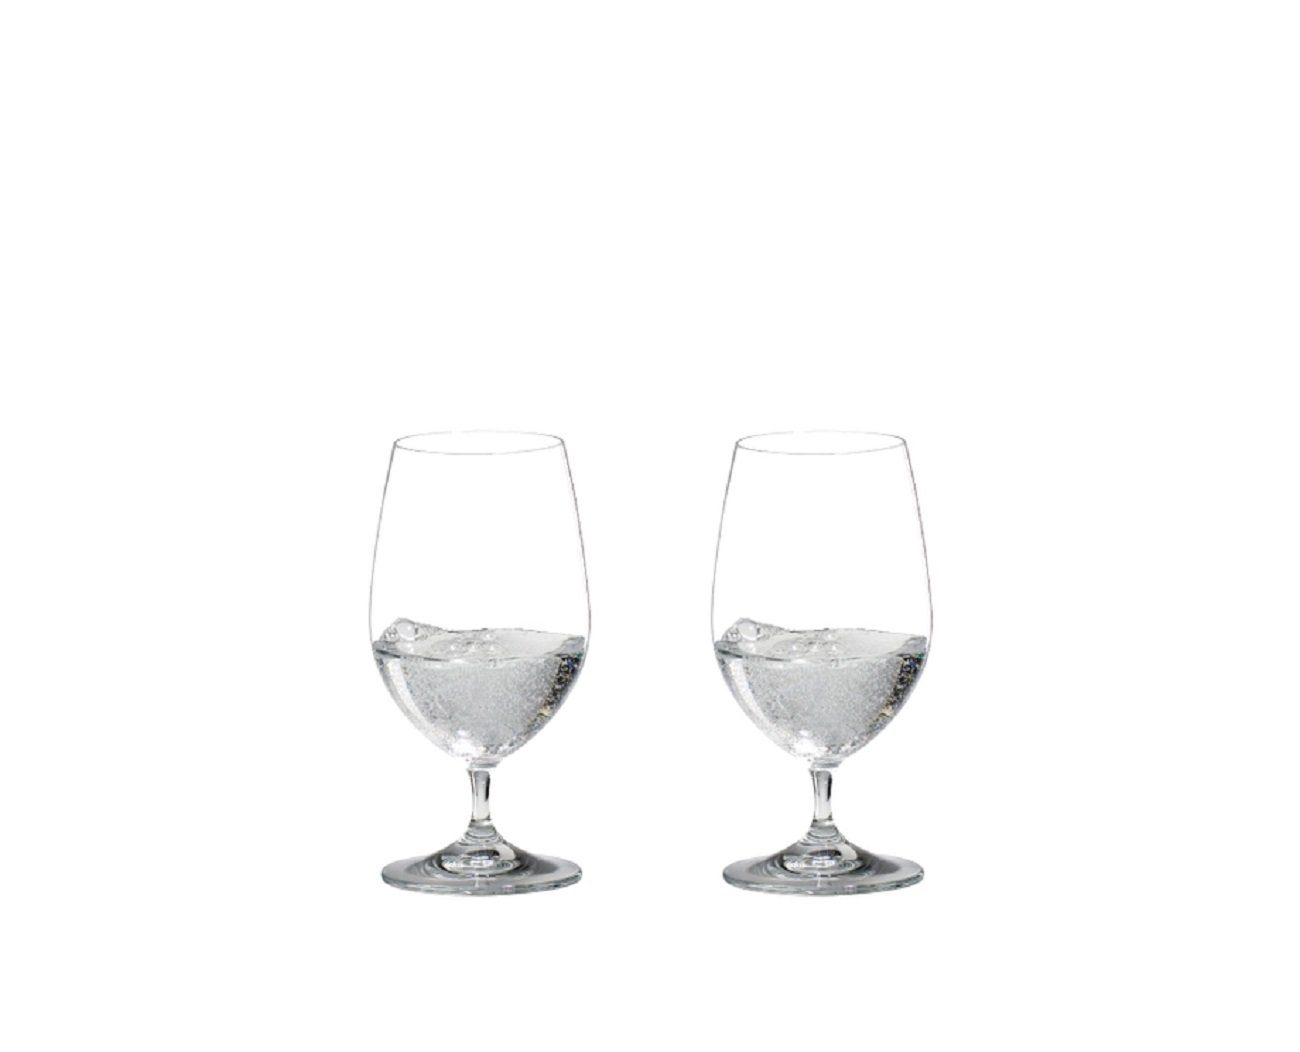 RIEDEL THE WINE GLASS COMPANY Glas Riedel, Vinum Gourmet Wasserglas 2-er Set, Kristallglas